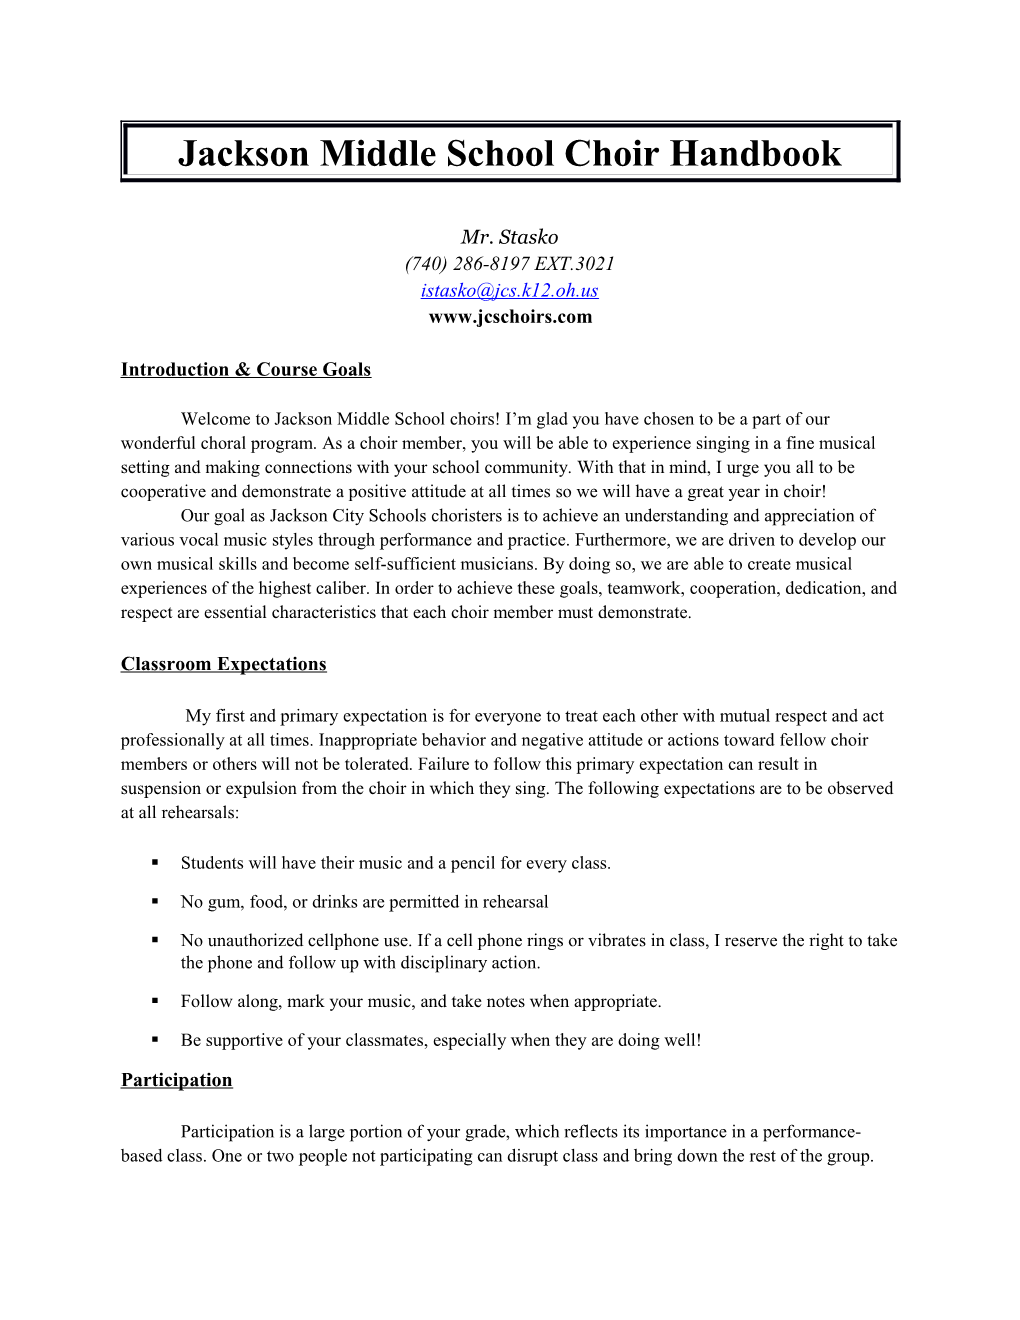 Jackson Middle School Choirhandbook